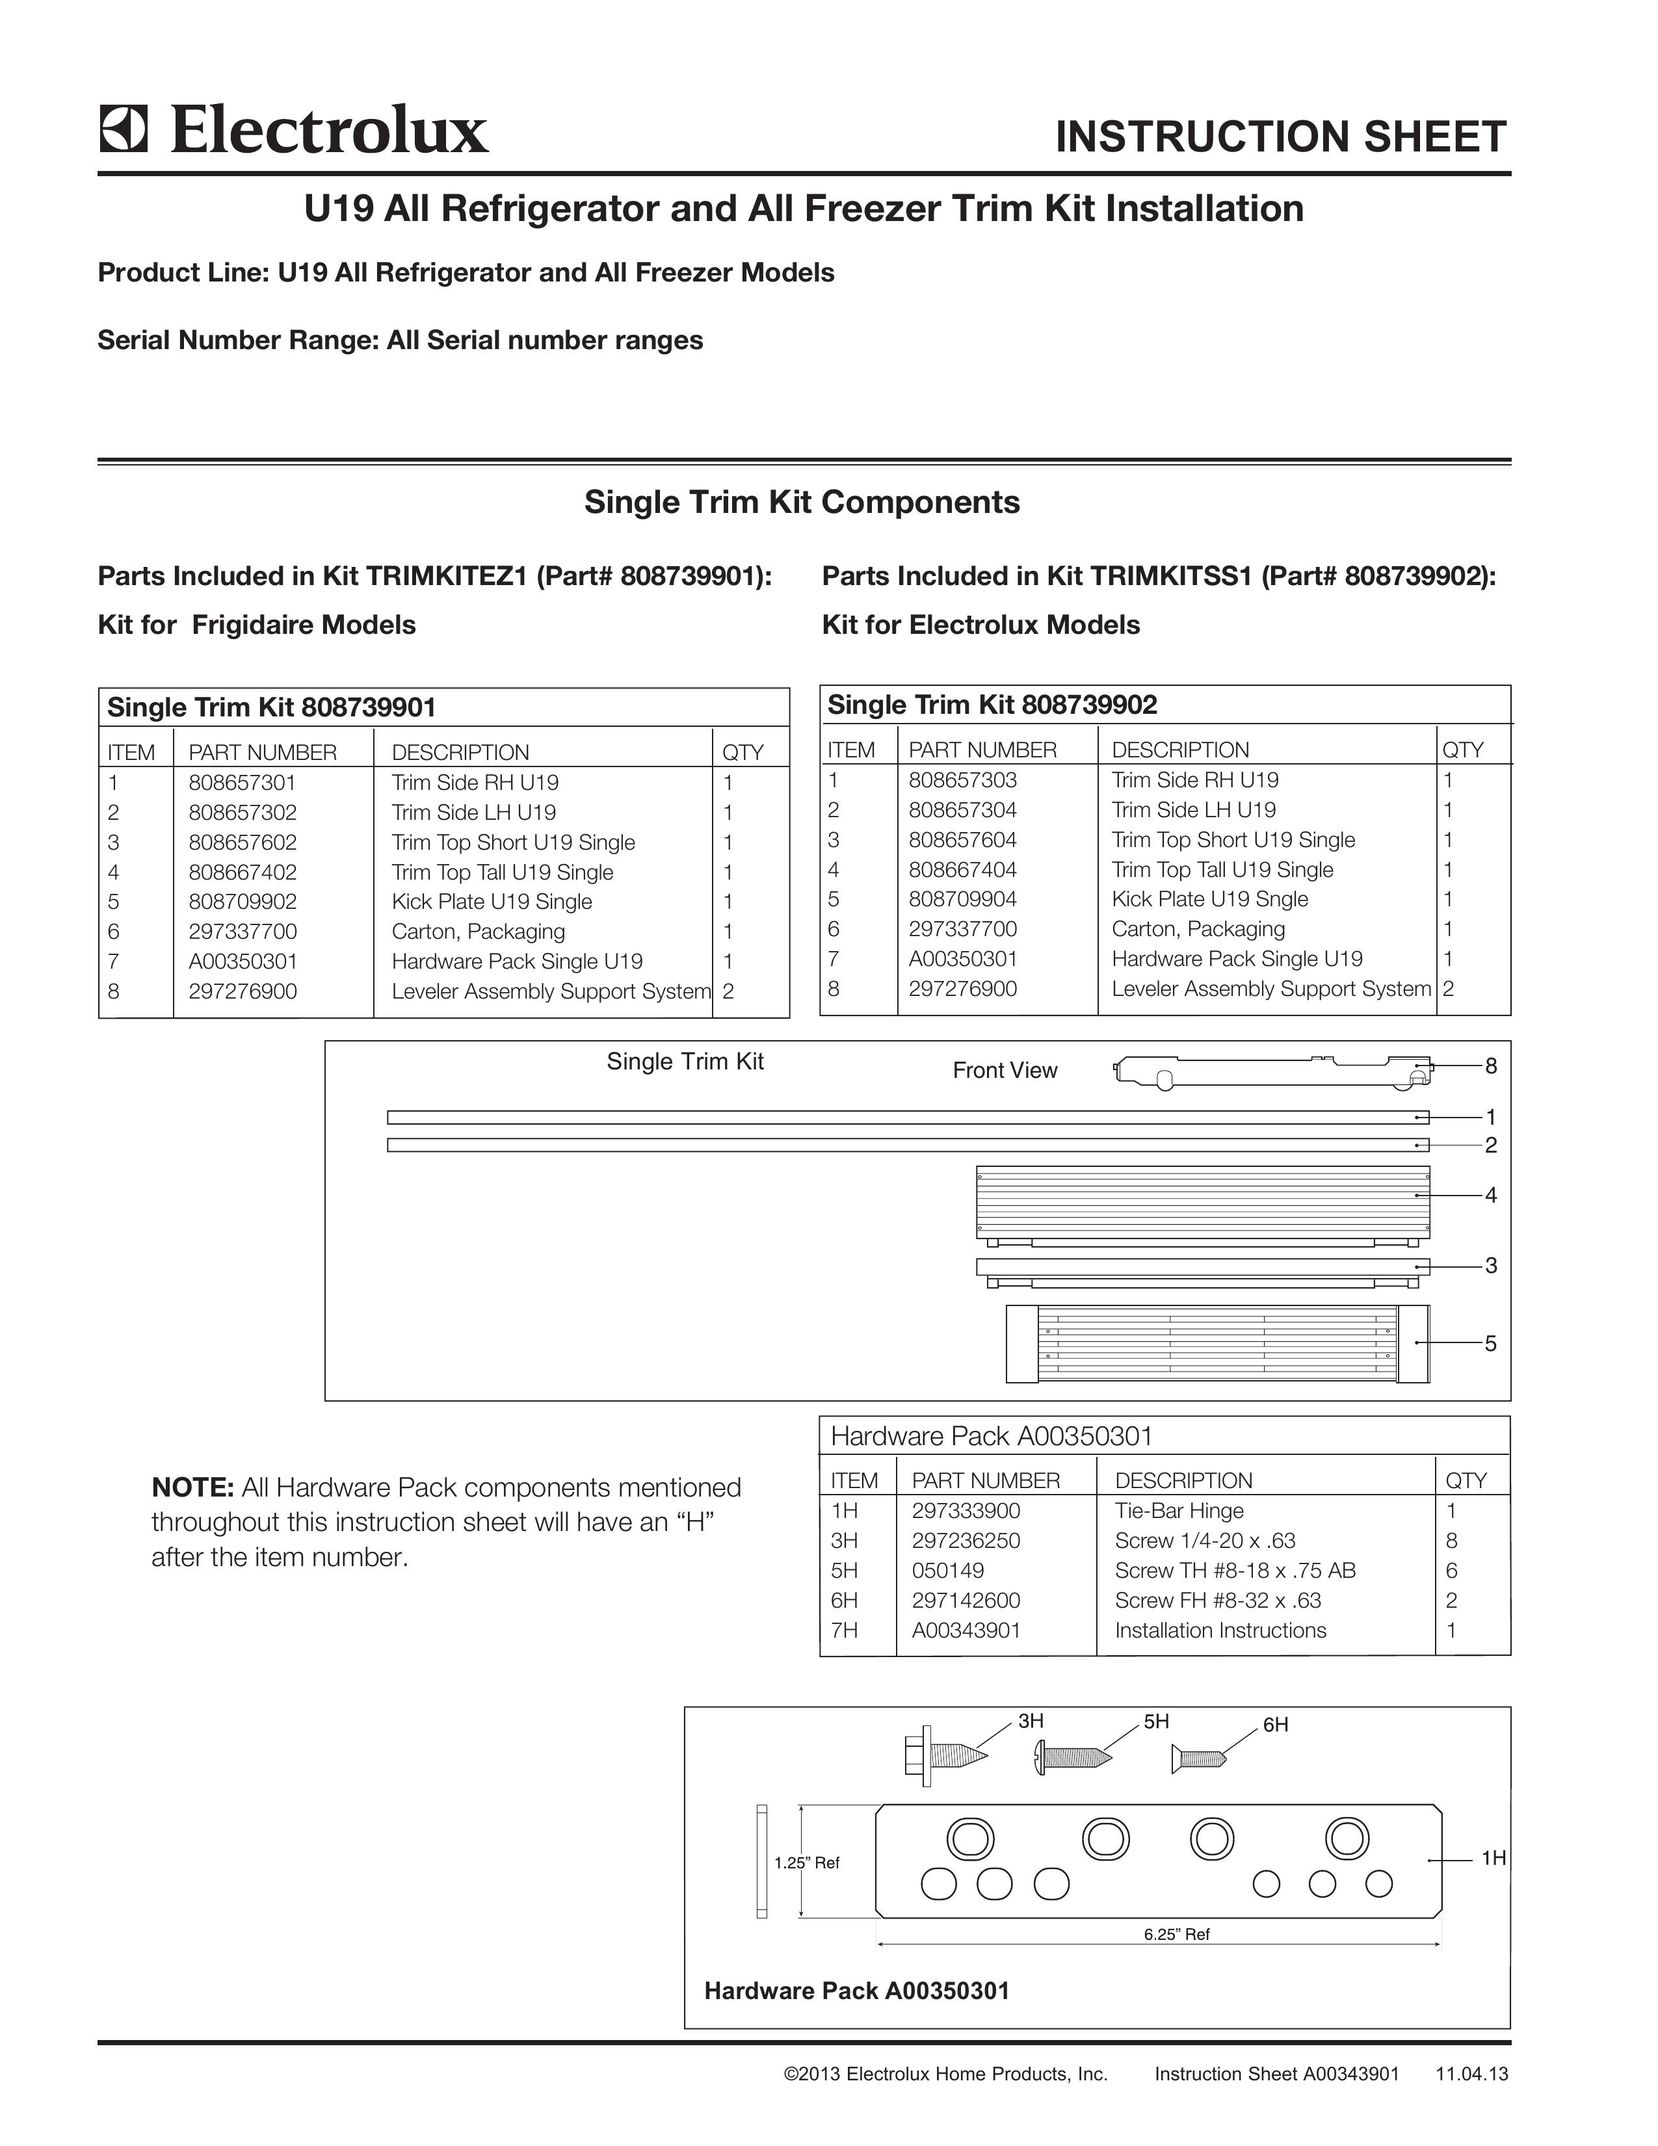 Electrolux TRIMKITSS1 Appliance Trim Kit User Manual